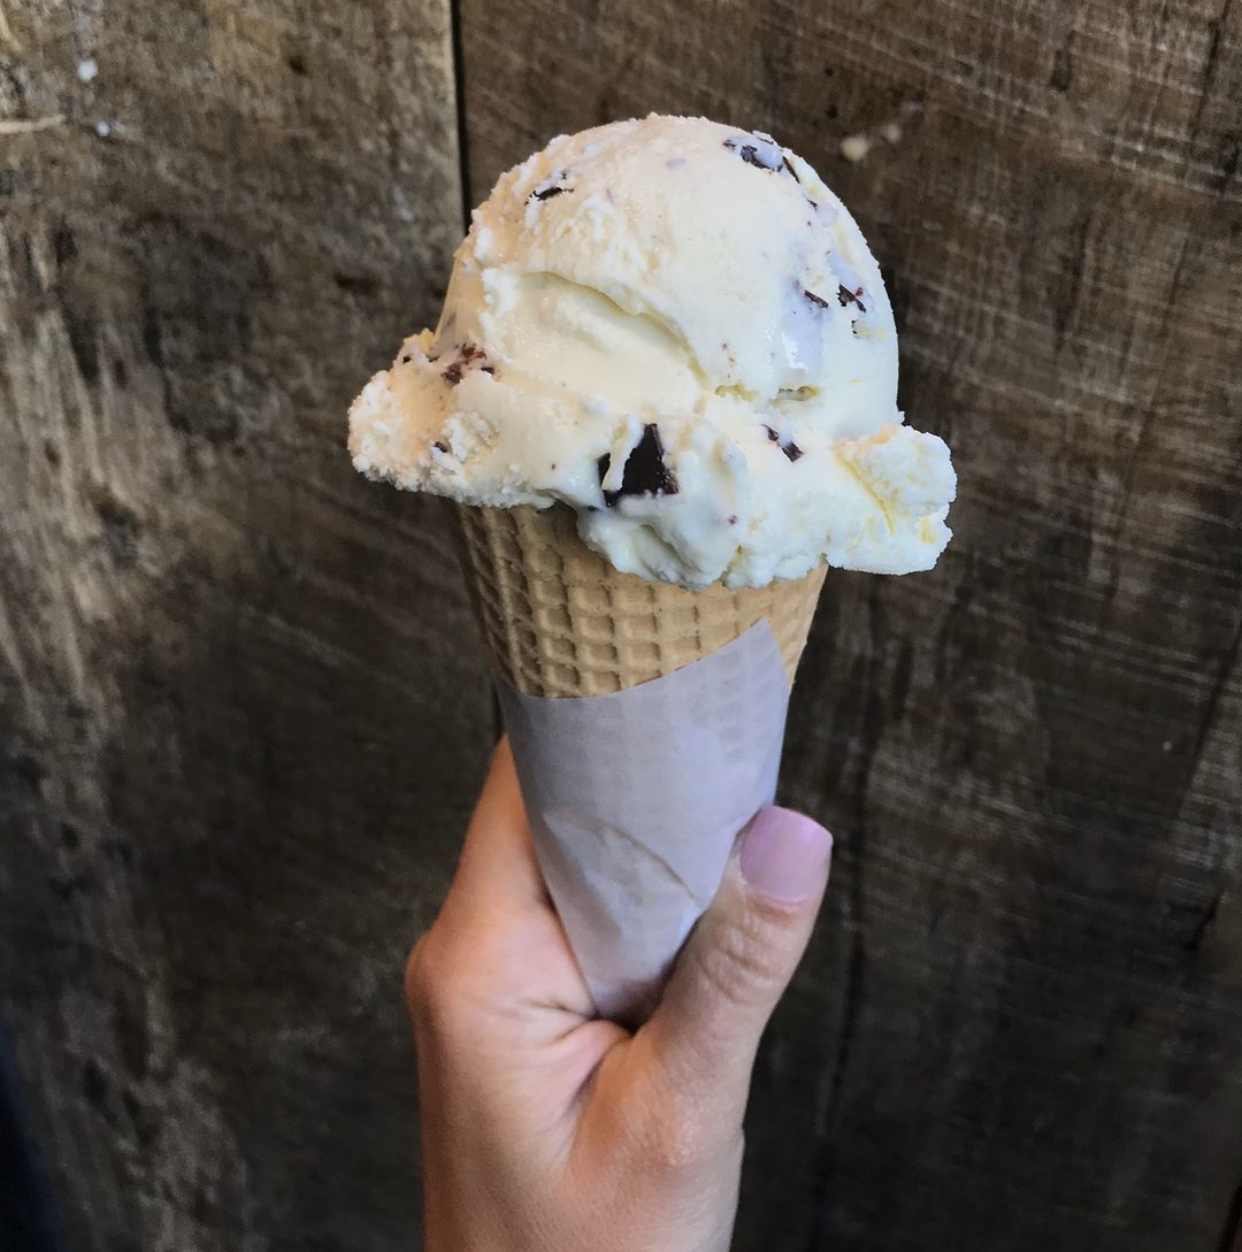 Rori's artisanal ice cream cone